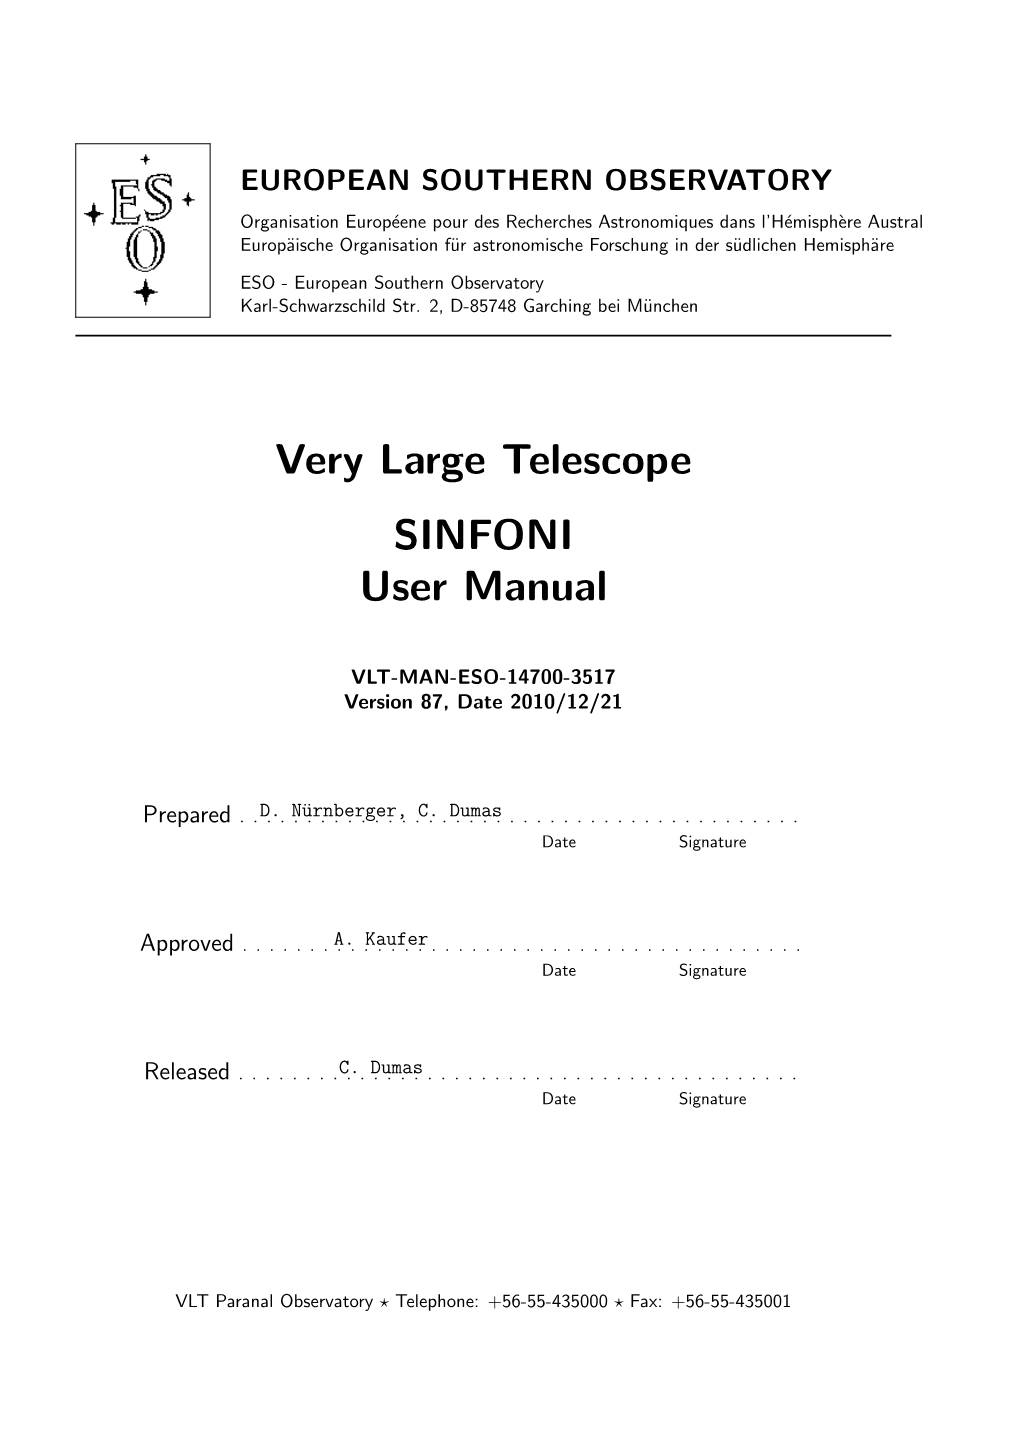 Very Large Telescope SINFONI User Manual